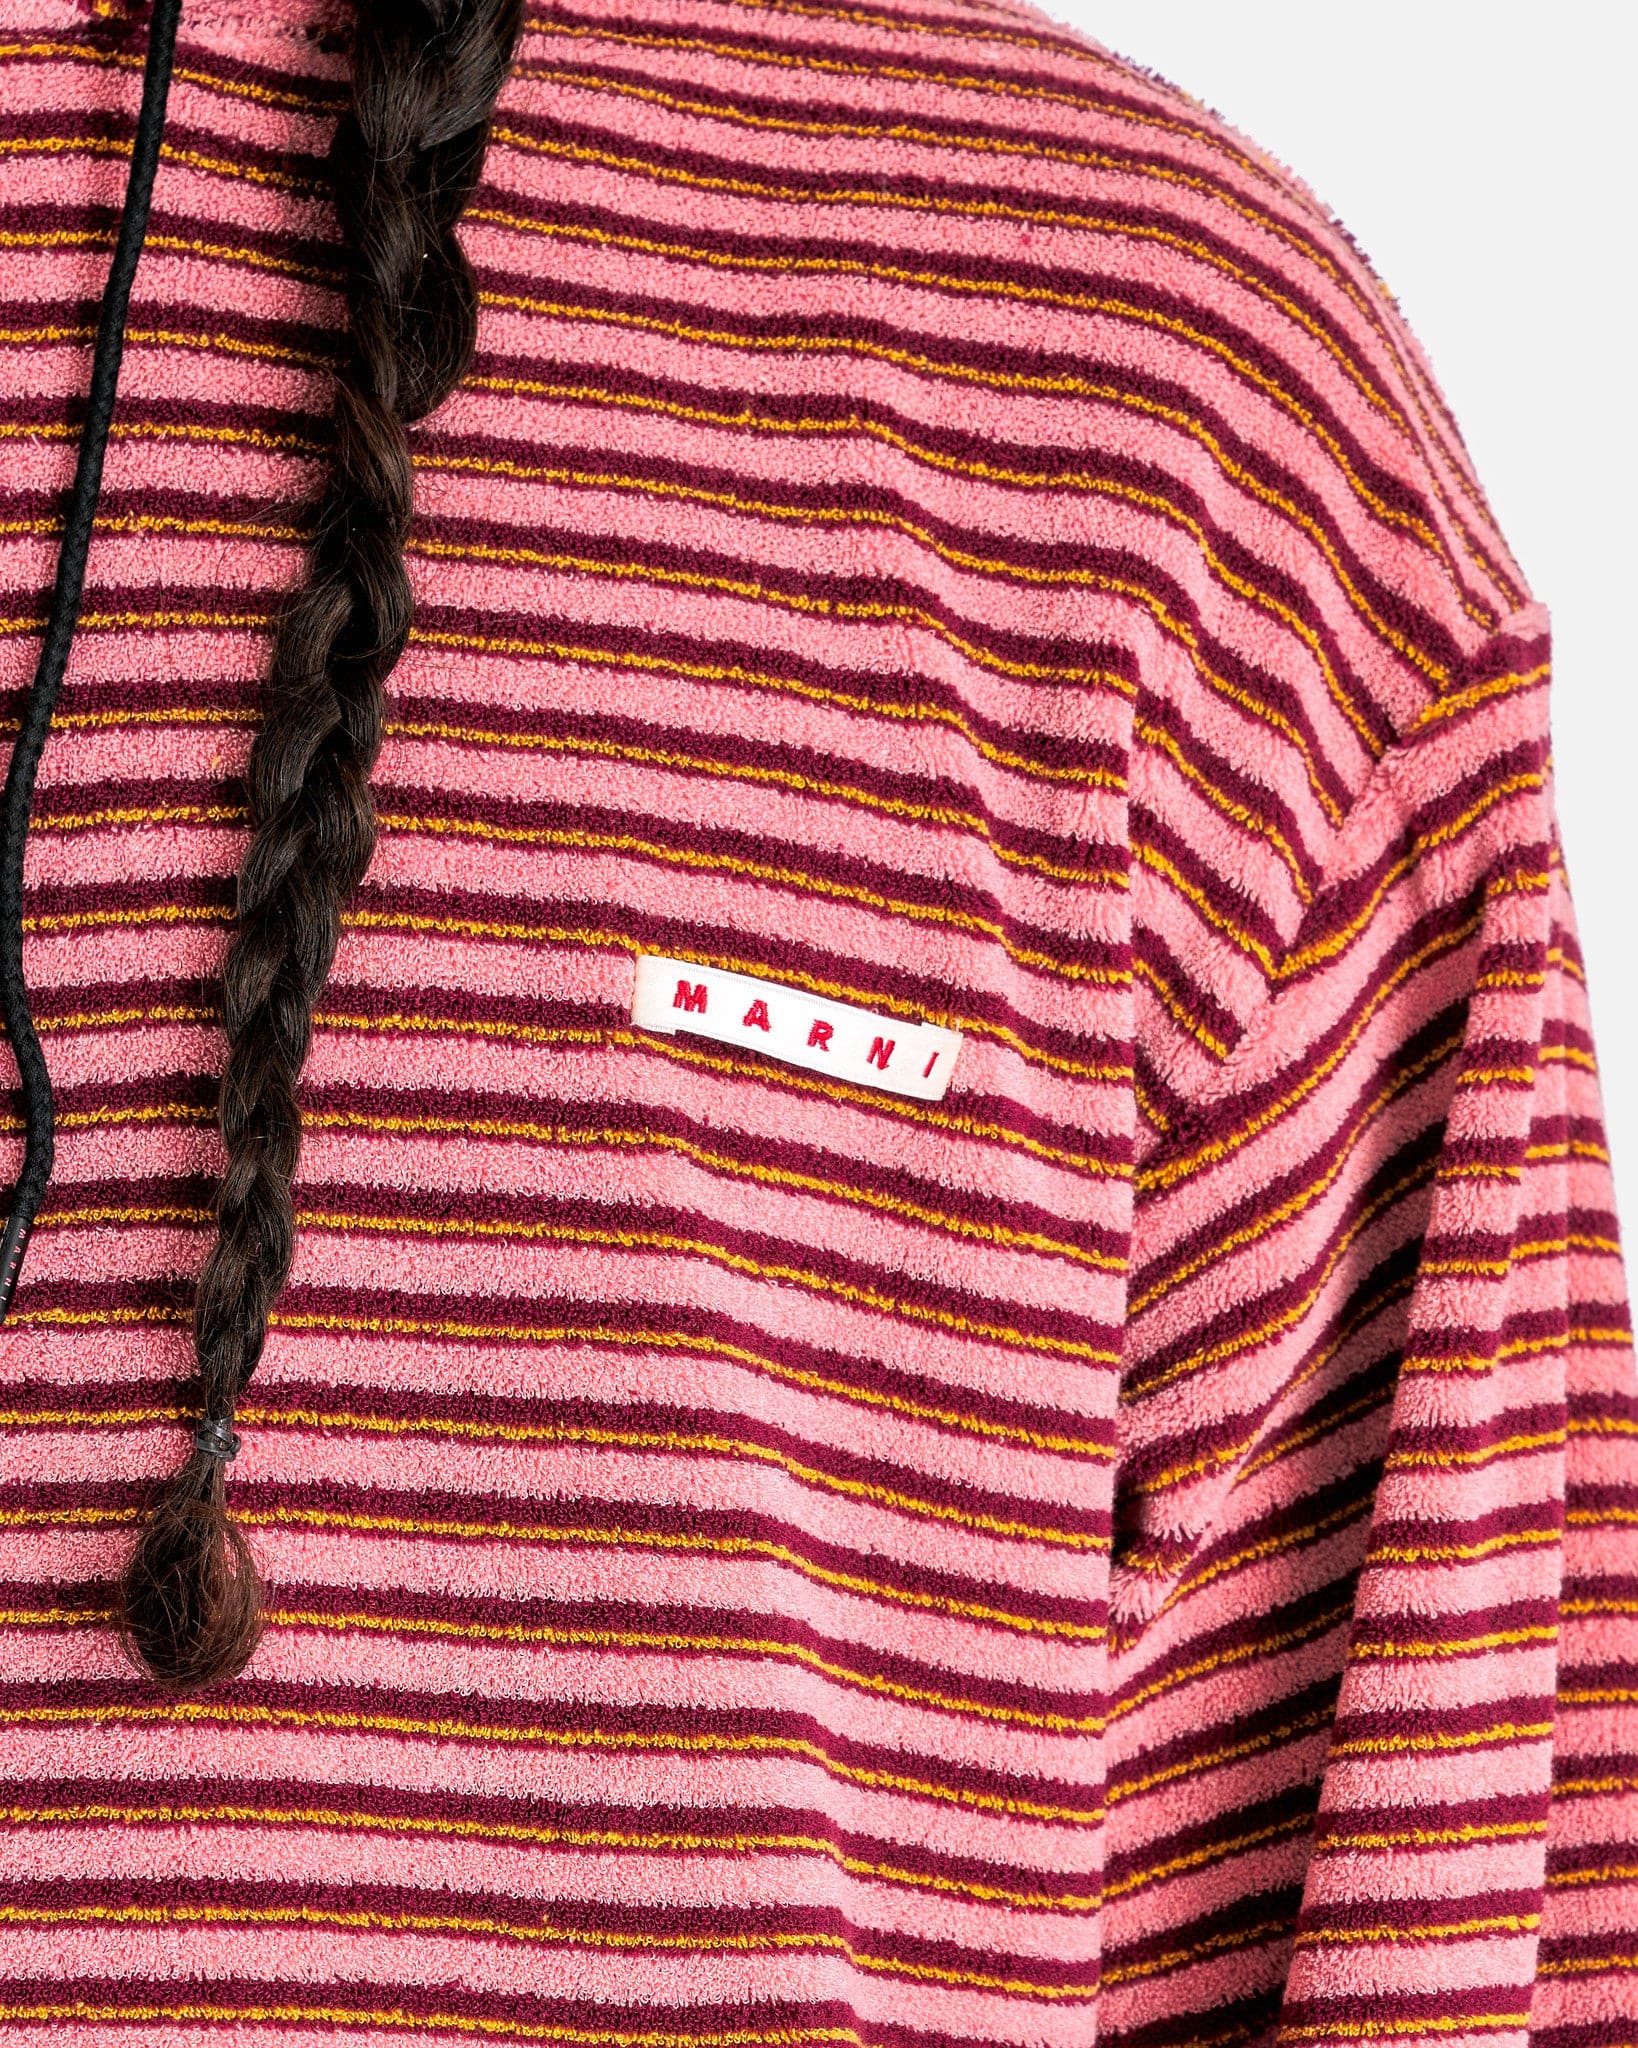 Marni Men's Sweatshirts Striped Terrycloth Hoodie in Gummy Pink